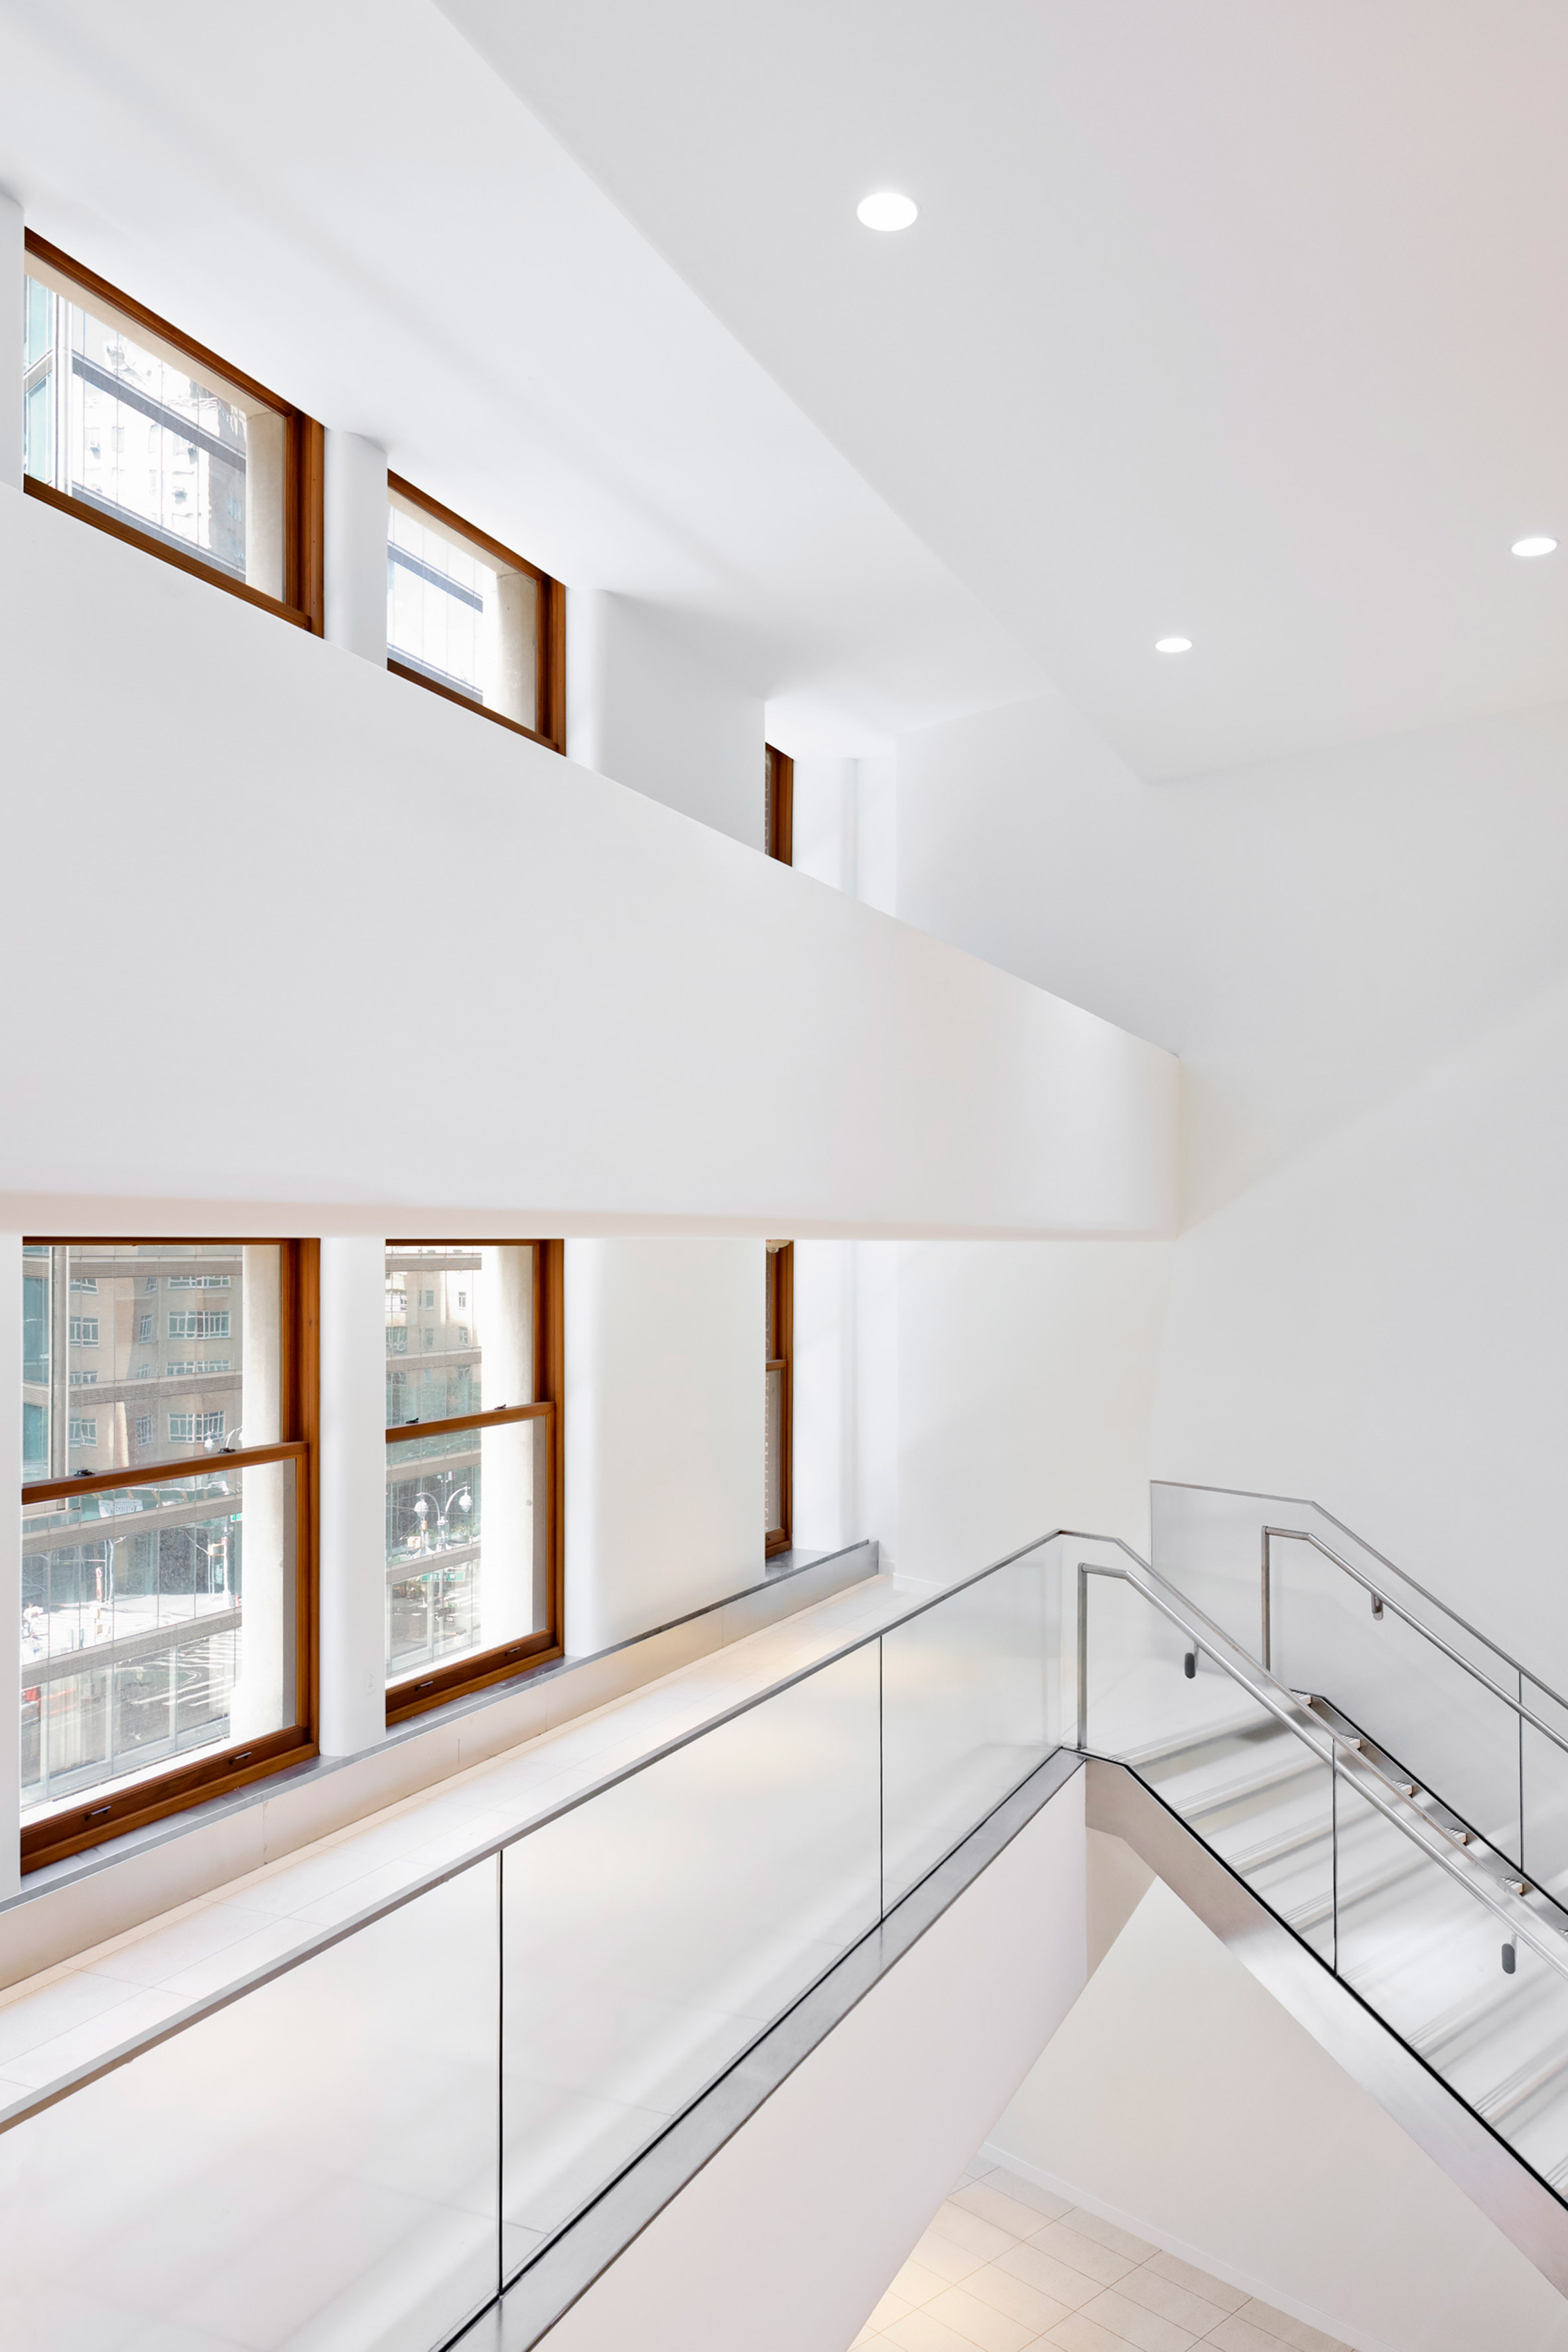 Nordstrom's Manhattan Flagship Unites Historic Landmarks and Contemporary  Forms - Metropolis